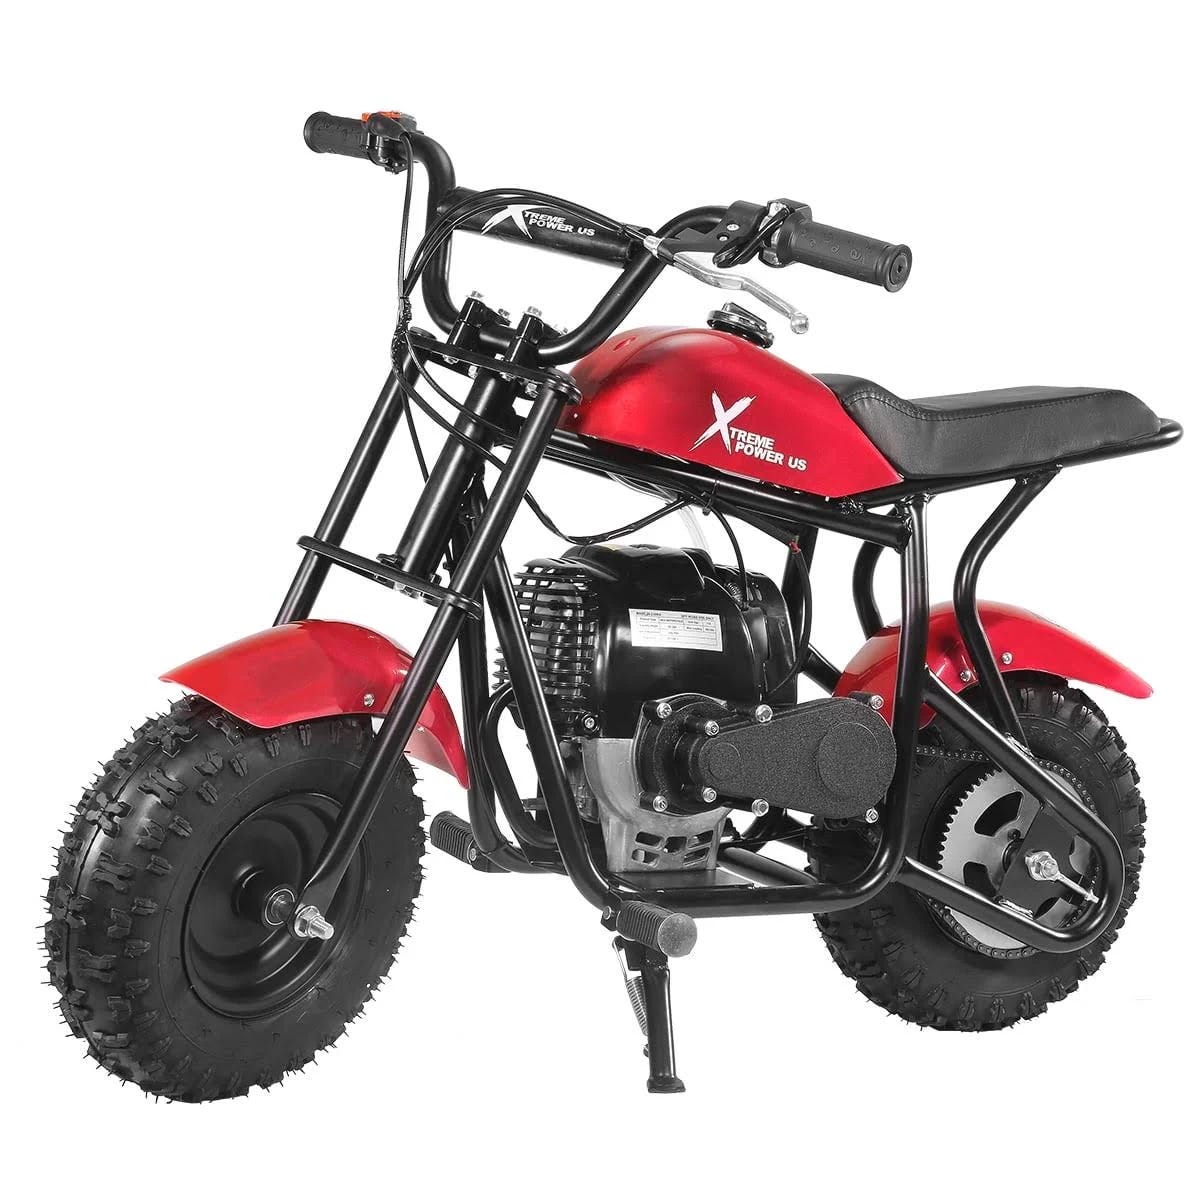 Xtremepowerus Kids Red Mini Motorcycle | Image